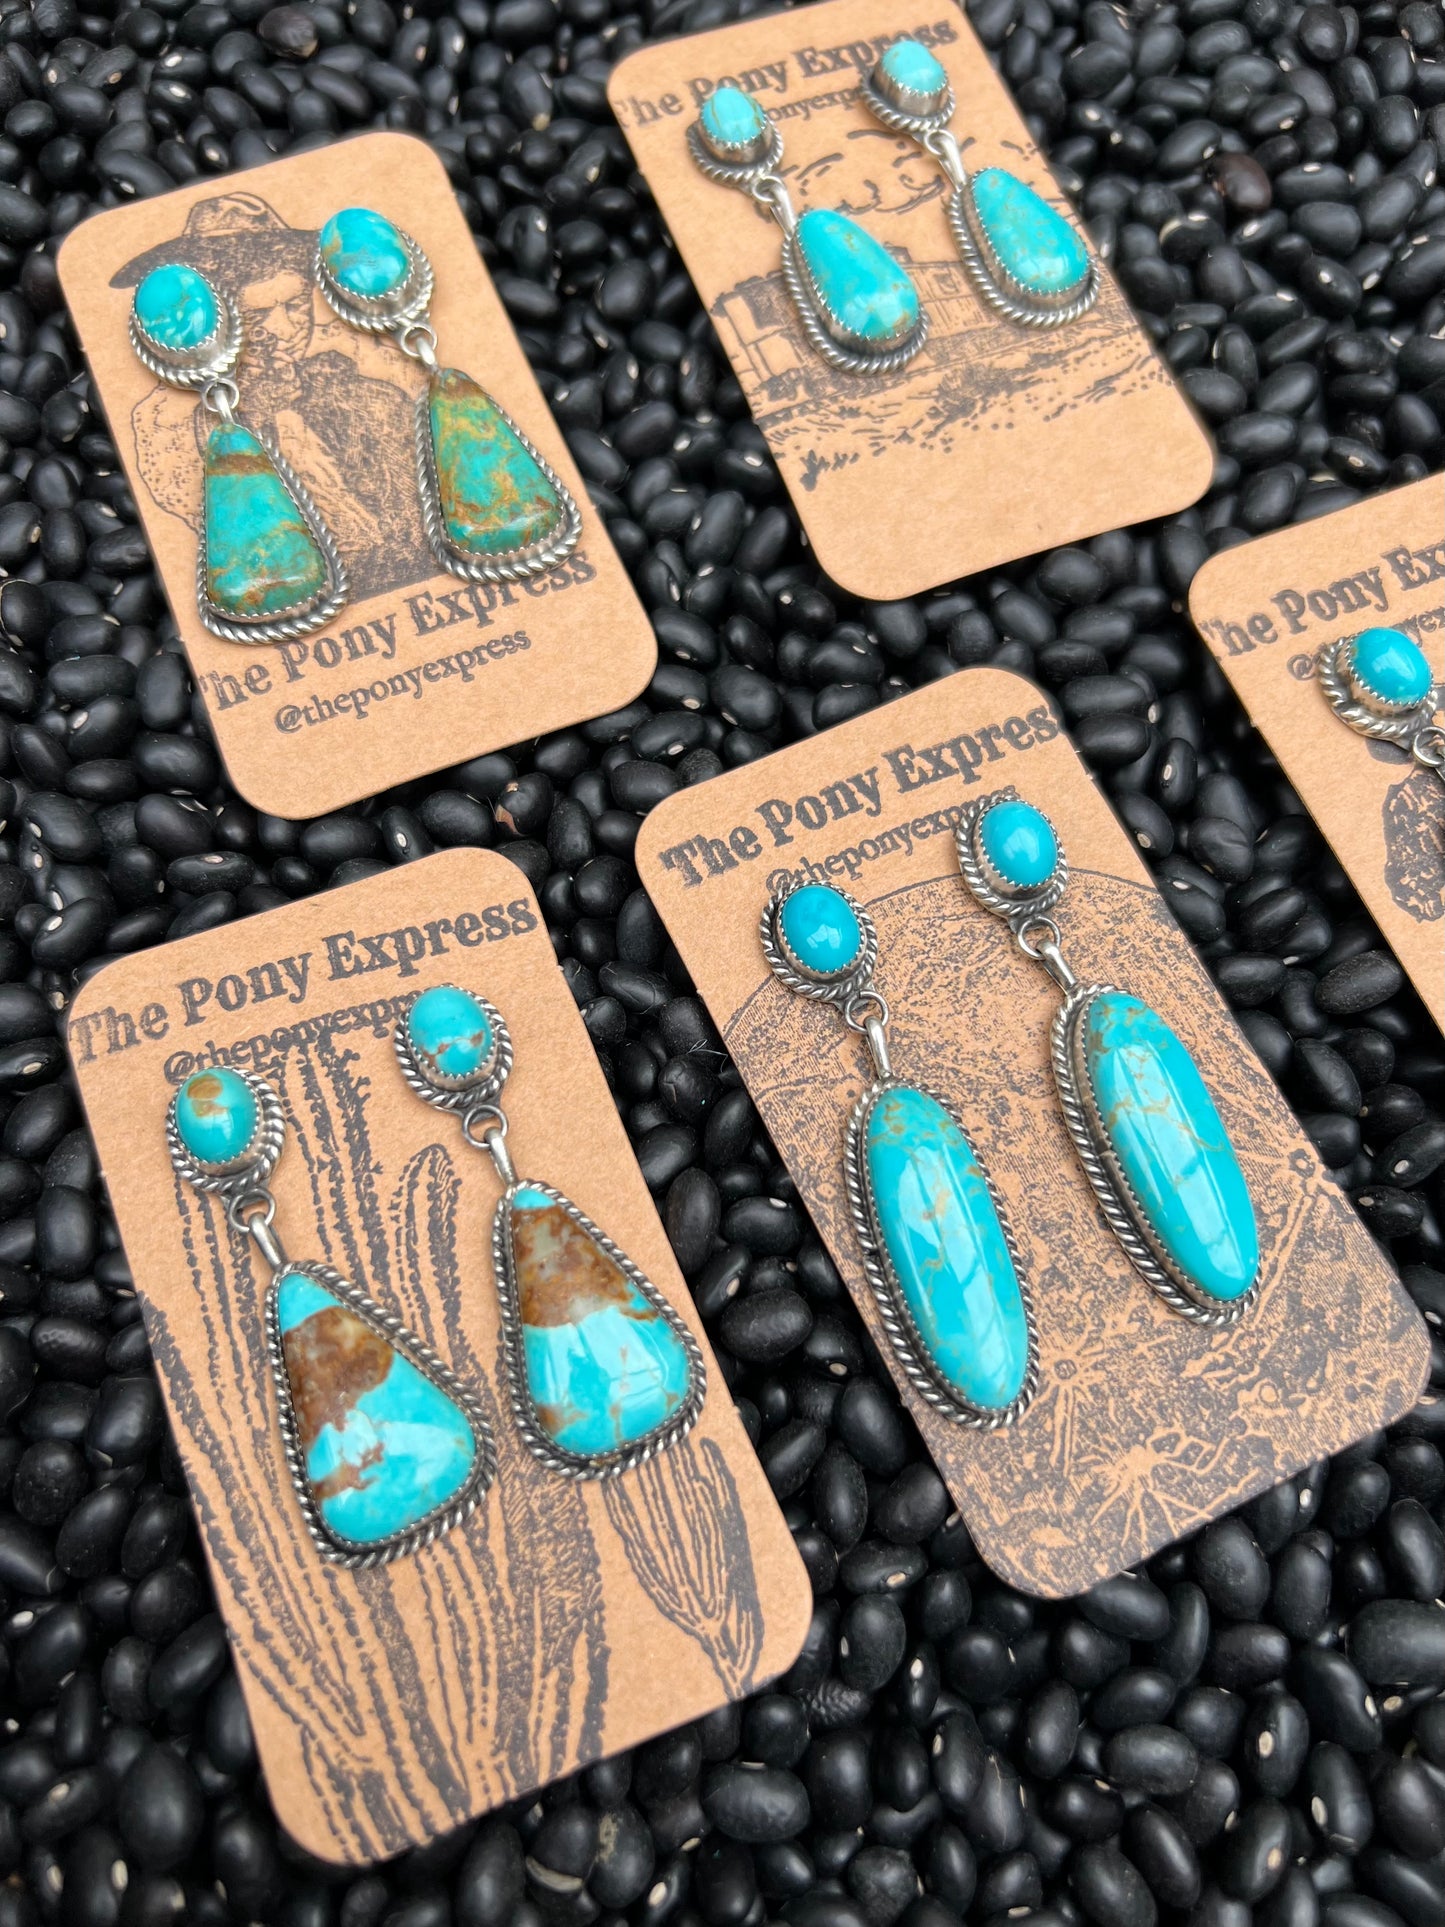 Large Turquoise Dangle Earrings